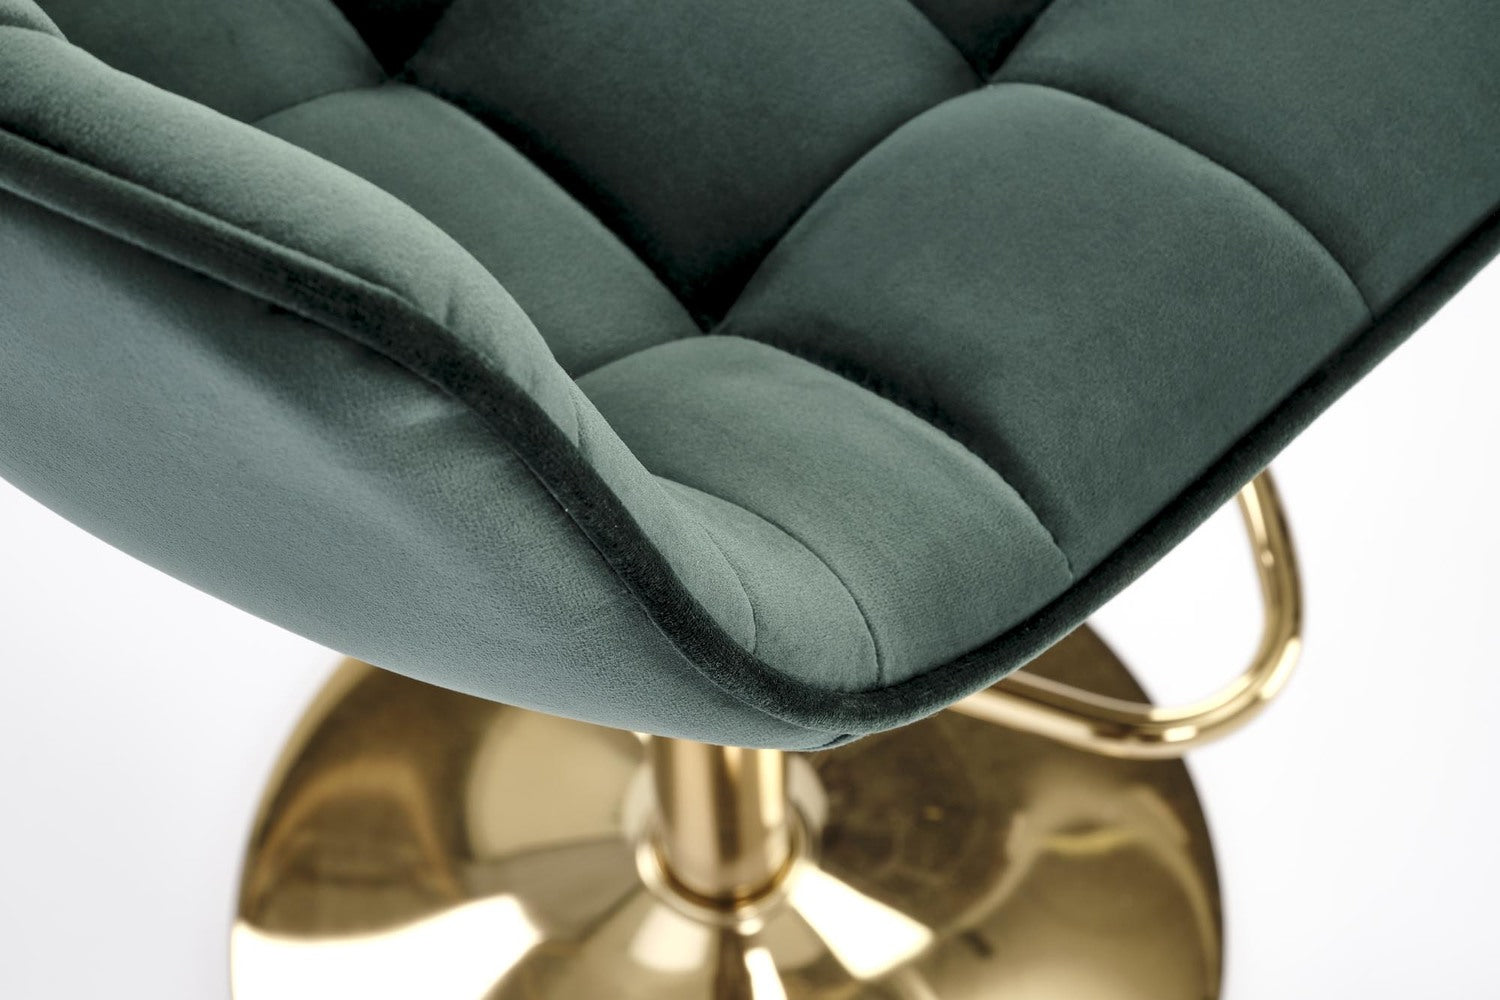 NC krēsls kājas - zelts, sēdeklis - tumši zaļs 43/44/84-106/62-84 cm - N1 Home